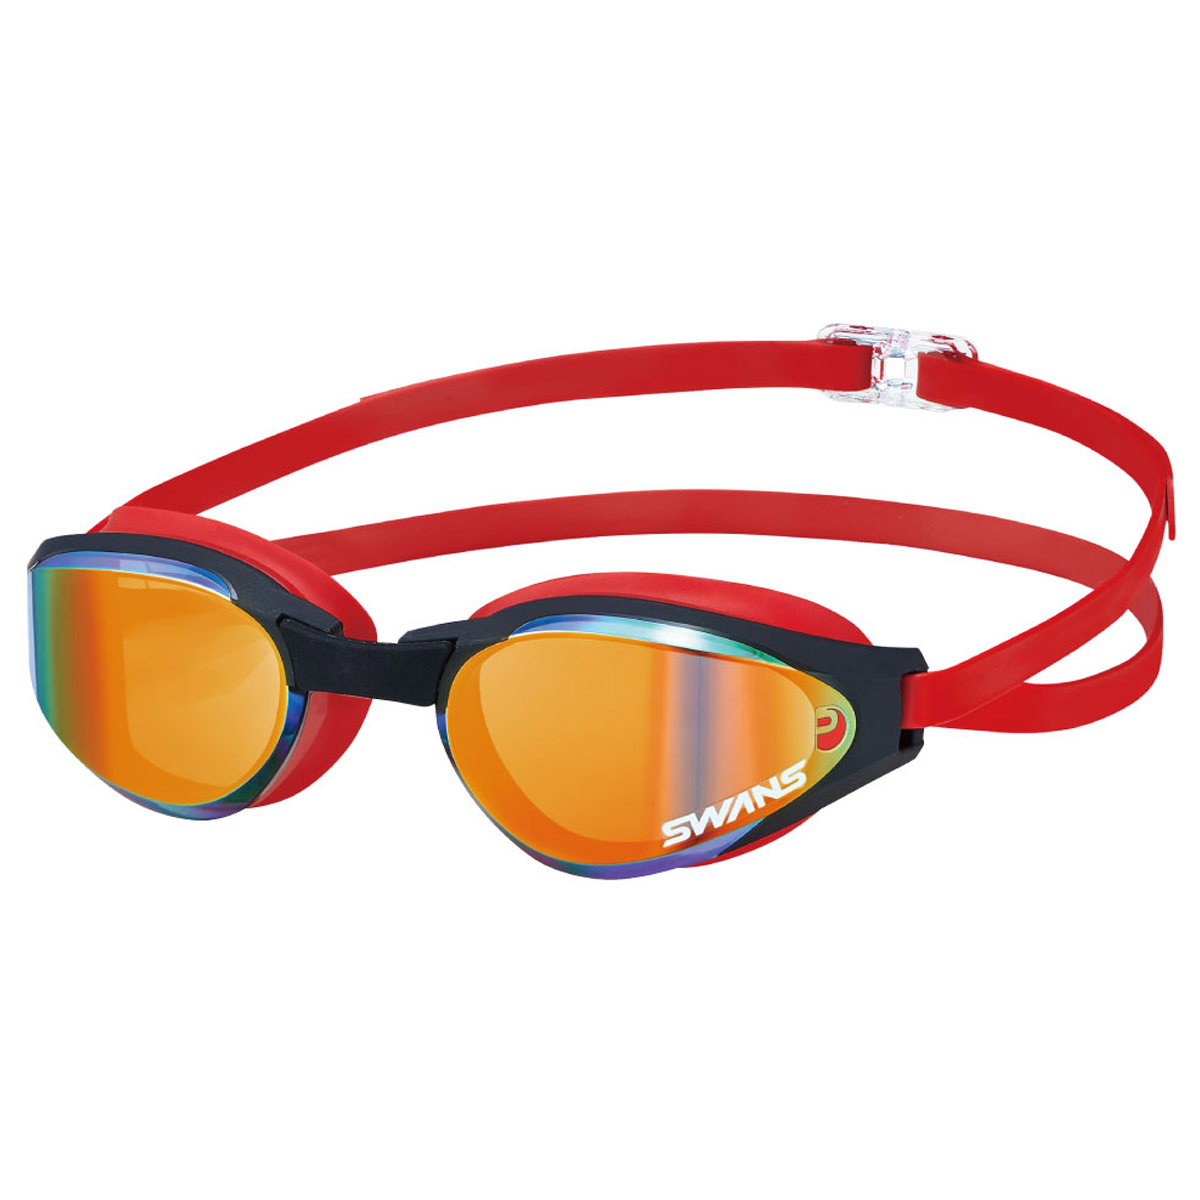 Swans SR81 Ascender Mirrored Goggles - Black / Orange